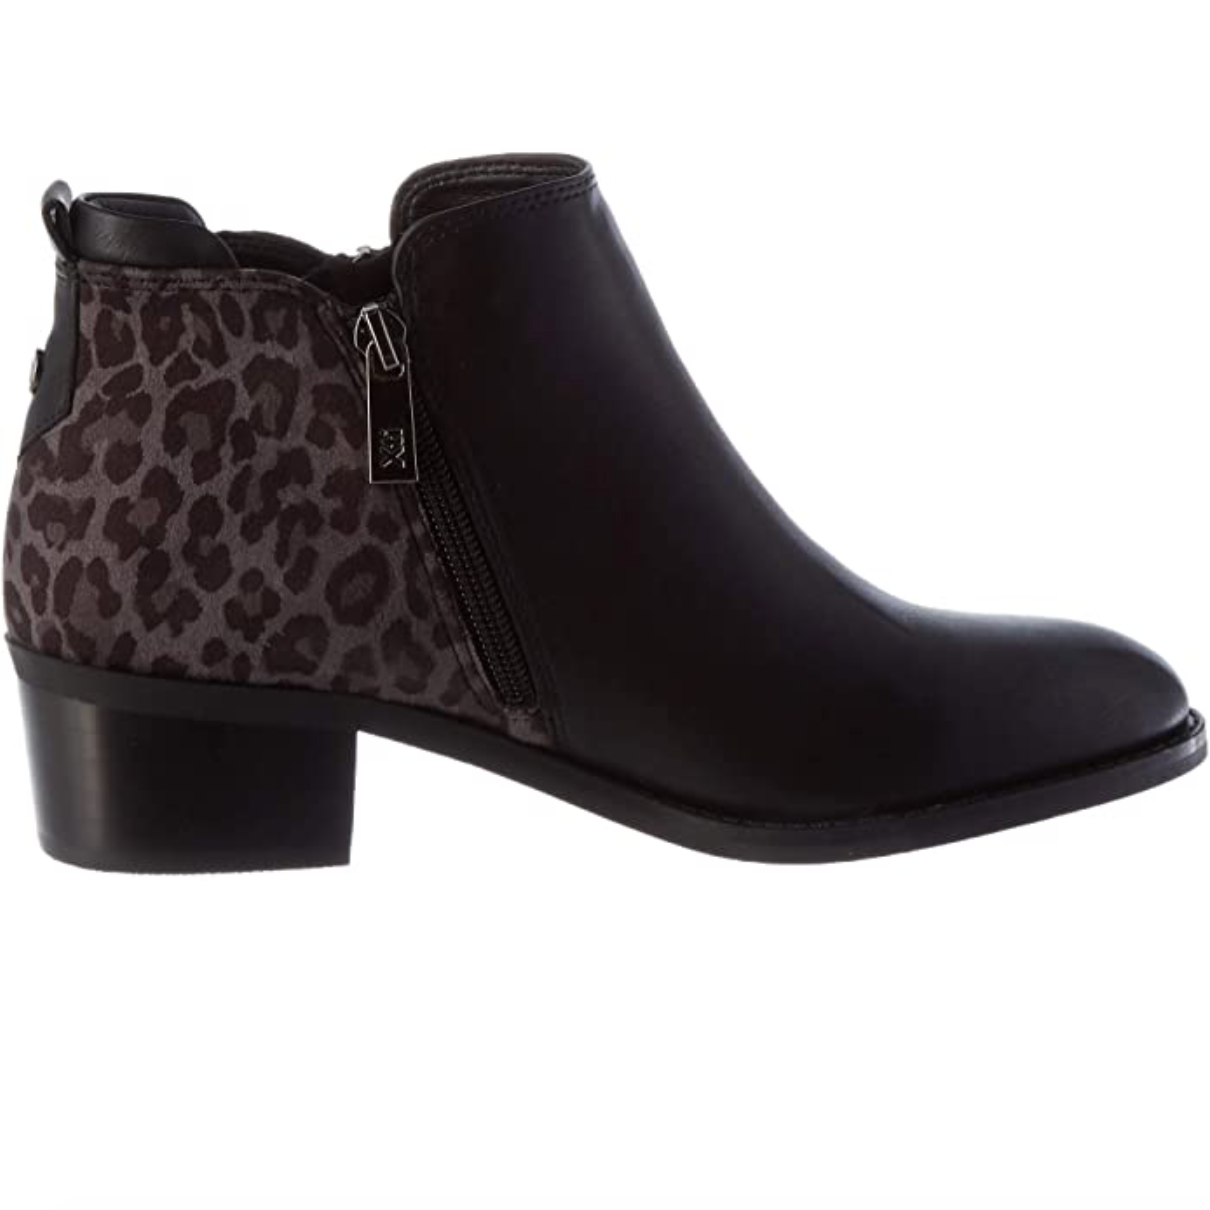 XTI - 44471 - Women's Fashion Boots - Black / Leopard